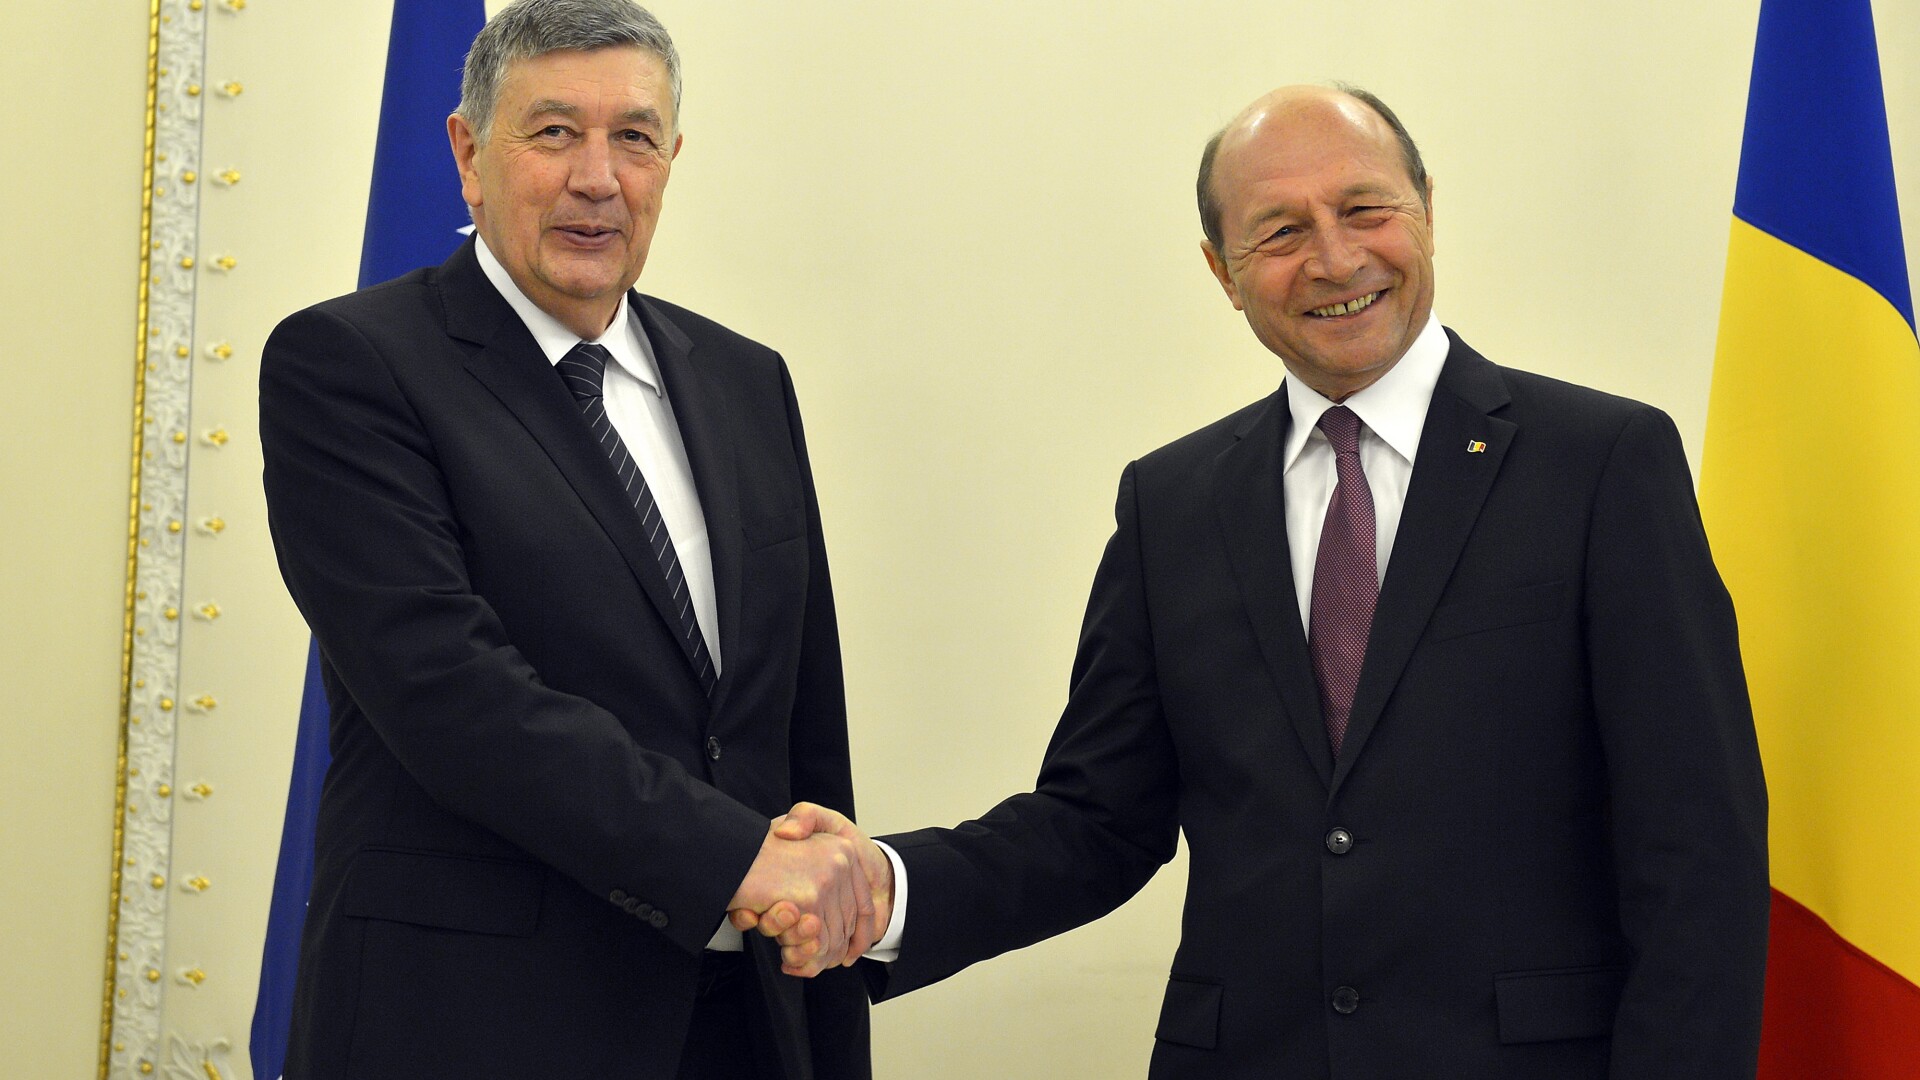 Nebojsa Radmanovic, Traian Basescu